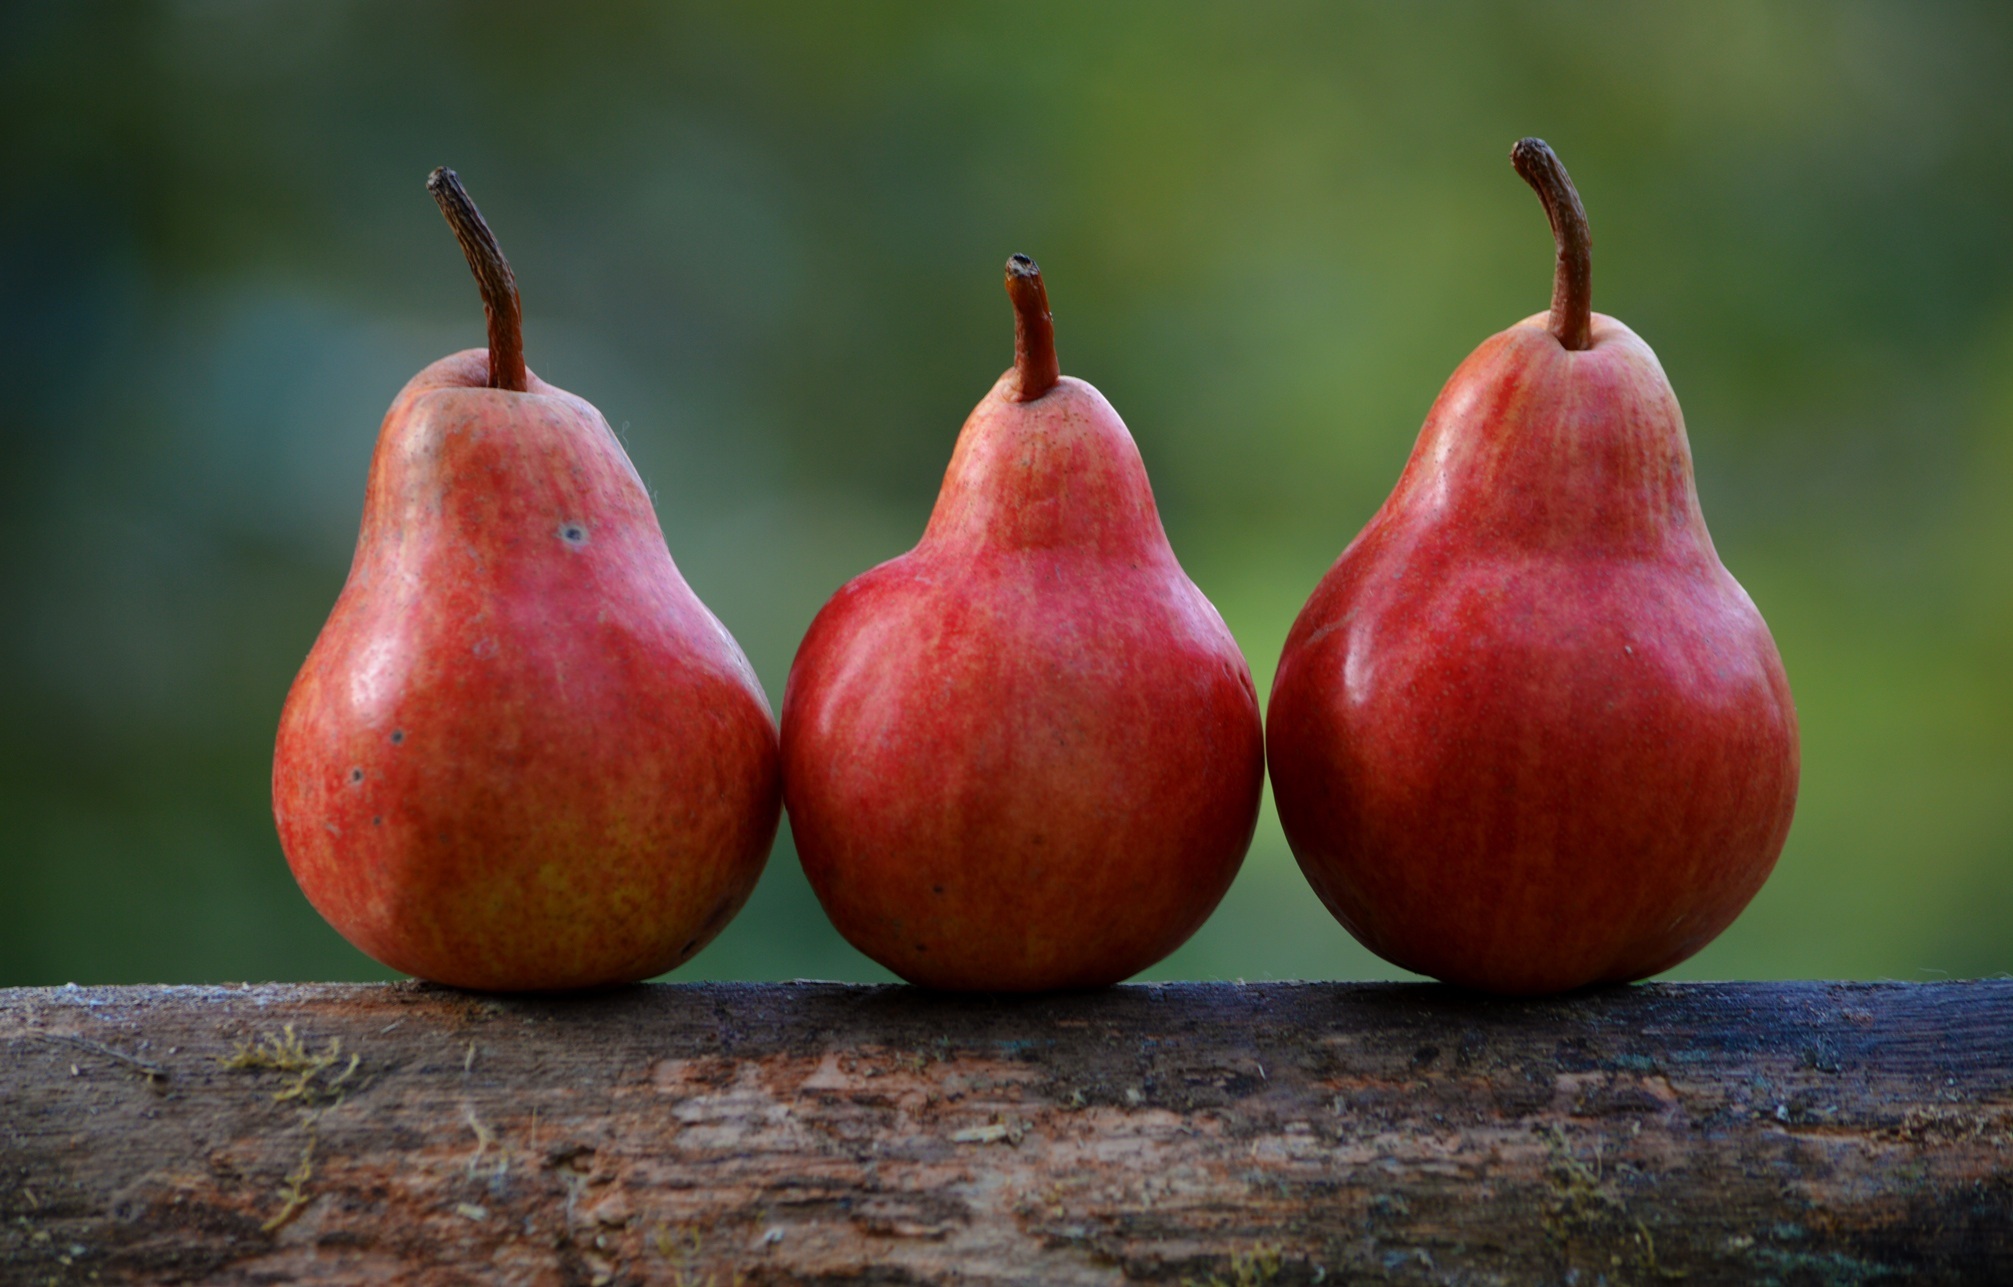 fruits, food, pears, ripe Image for desktop